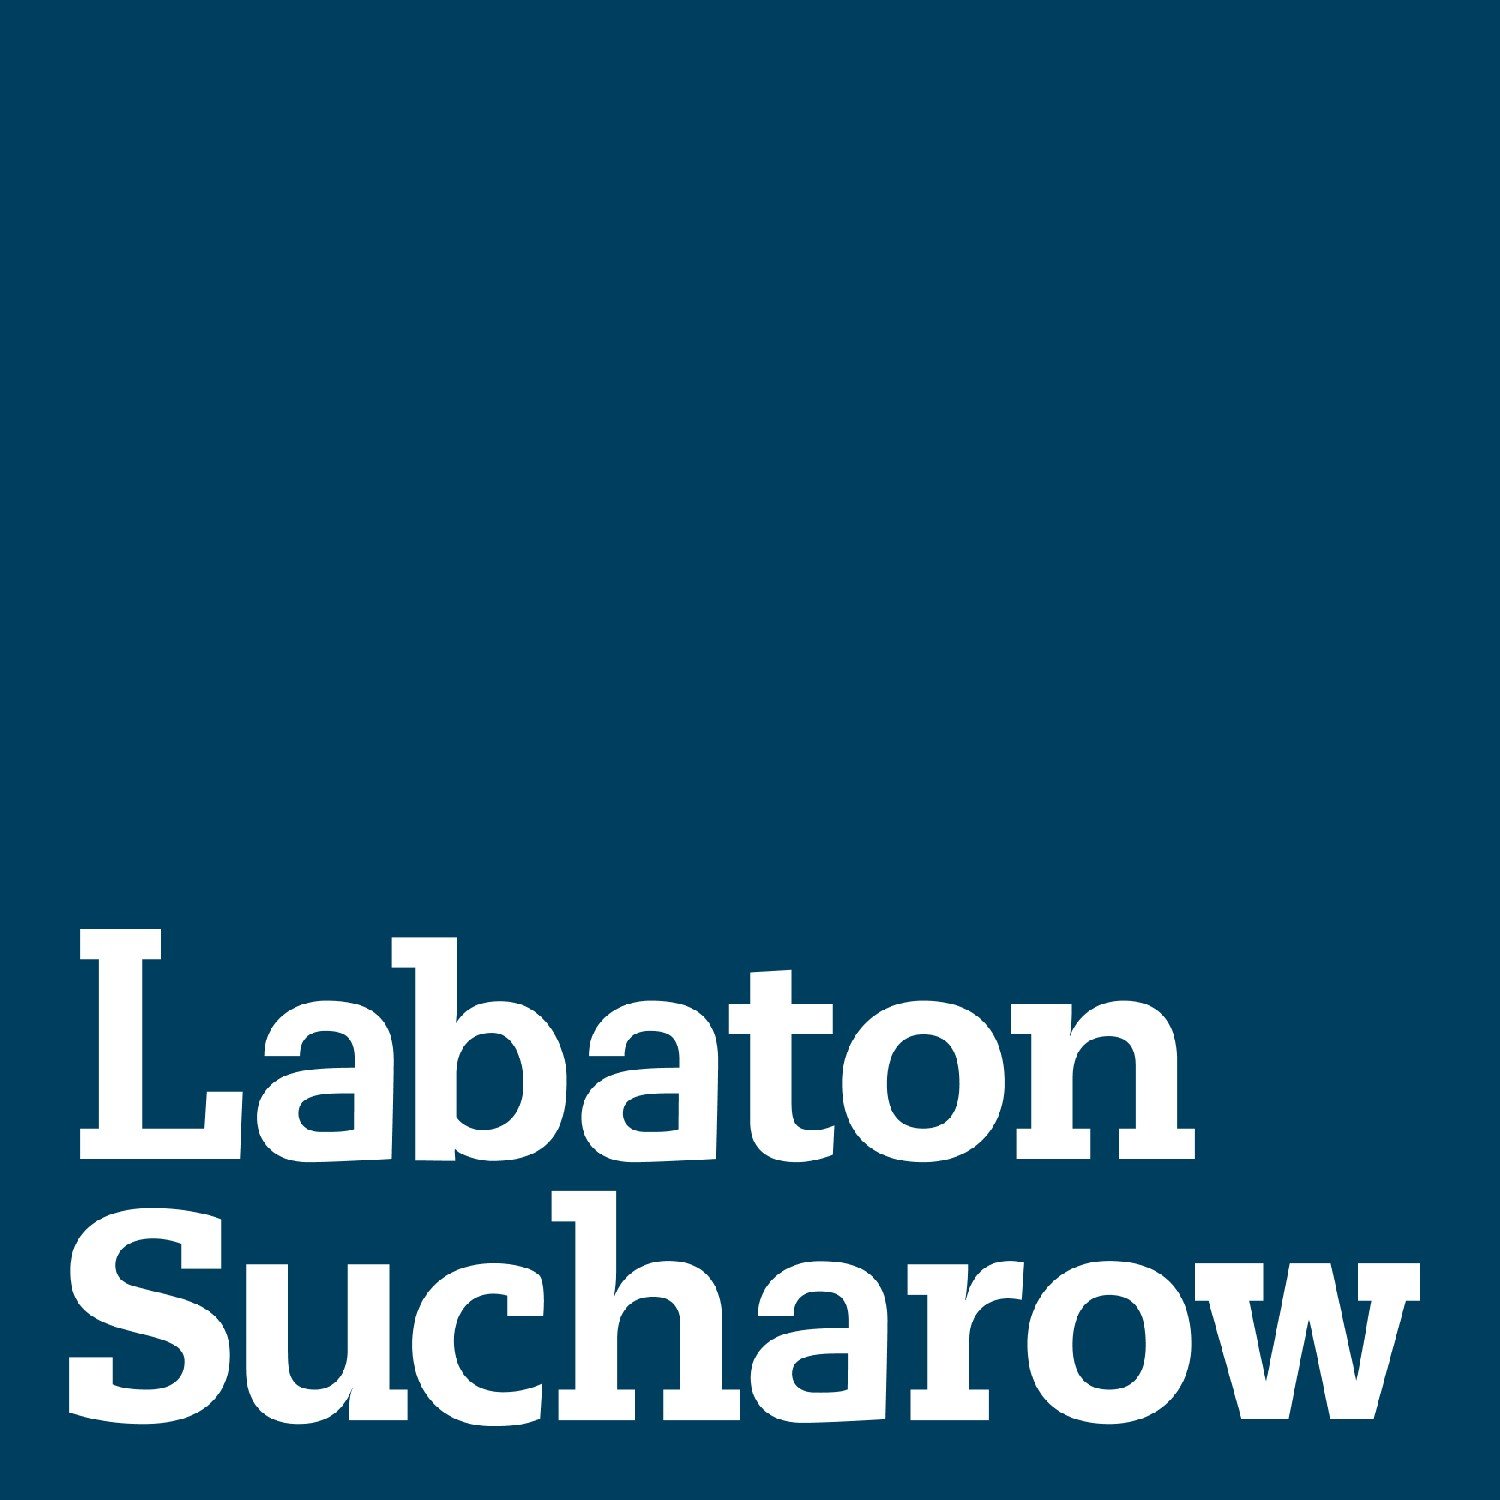 Labaton Sucharow LLP, Monday, June 28, 2021, Press release picture